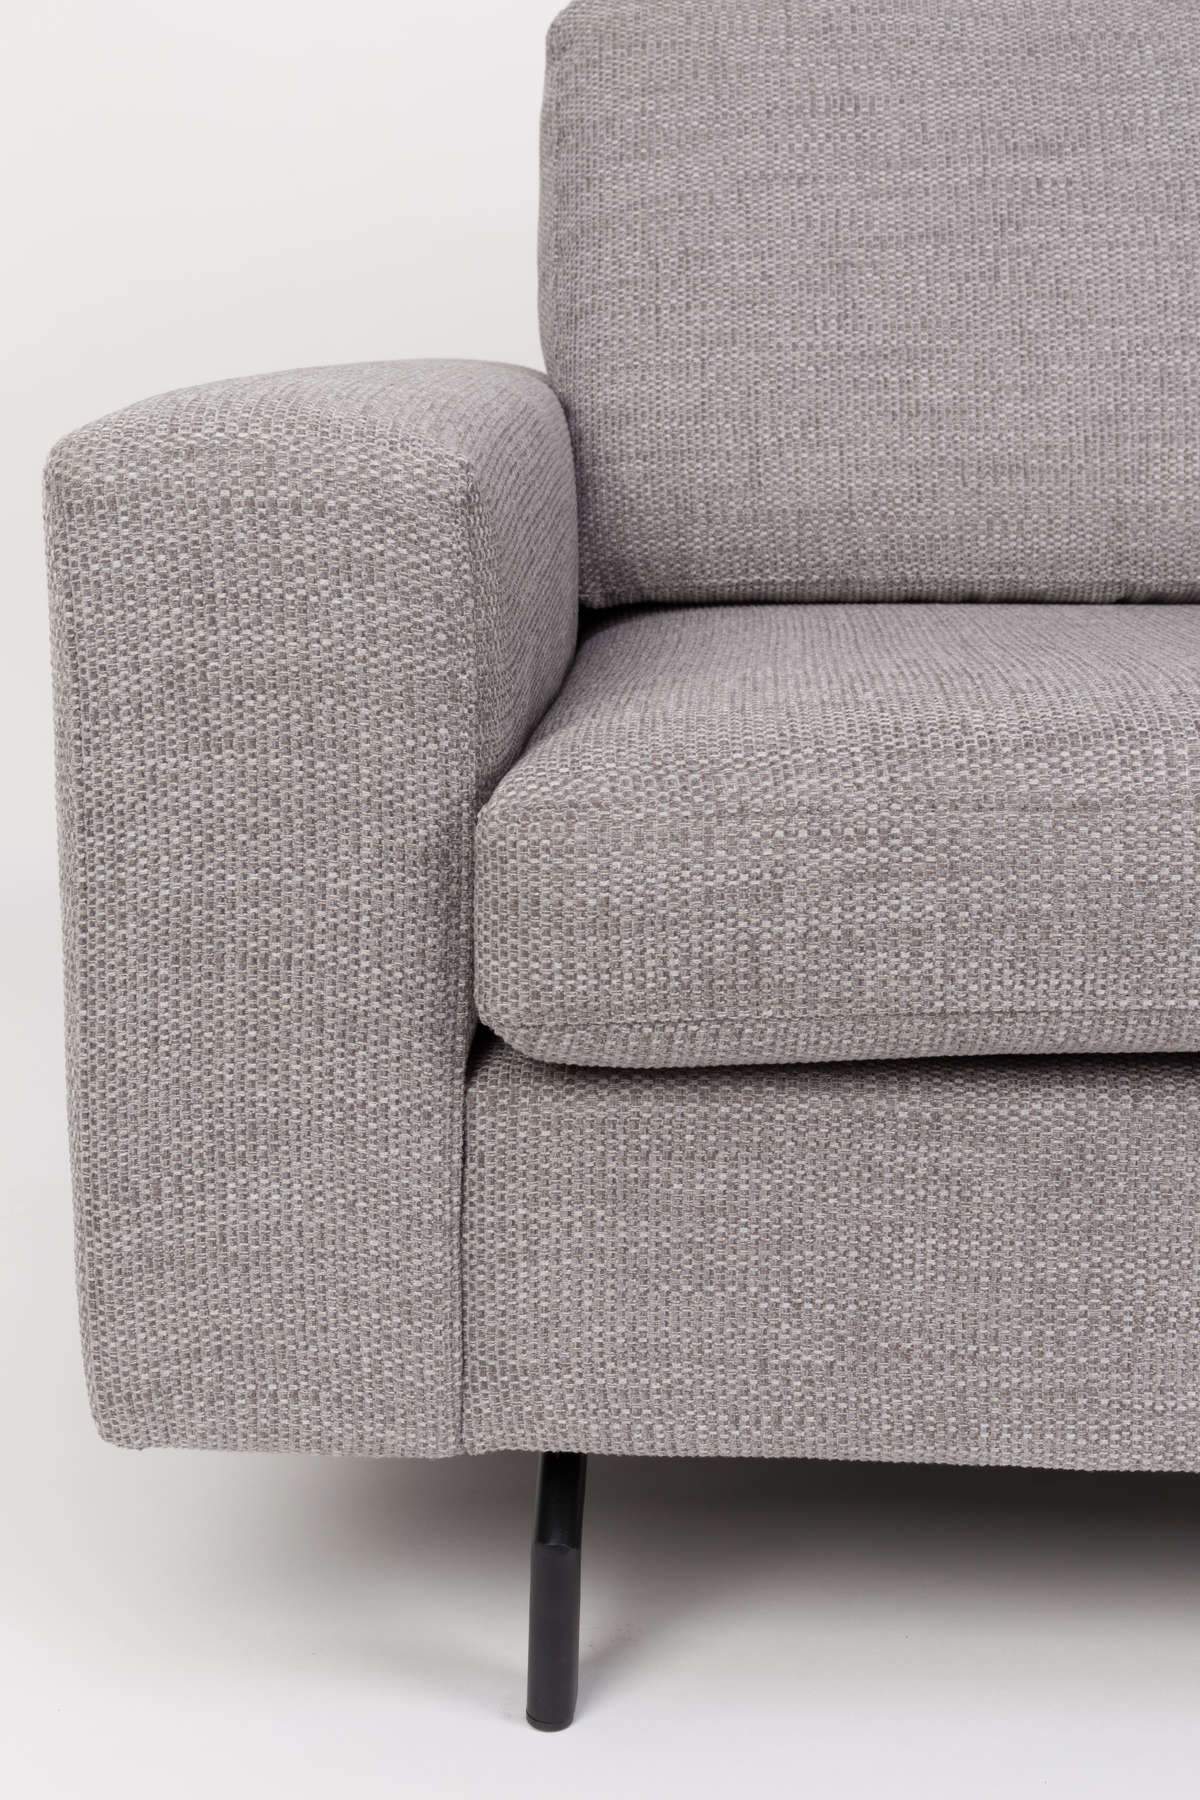 JEAN armchair grey, Zuiver, Eye on Design